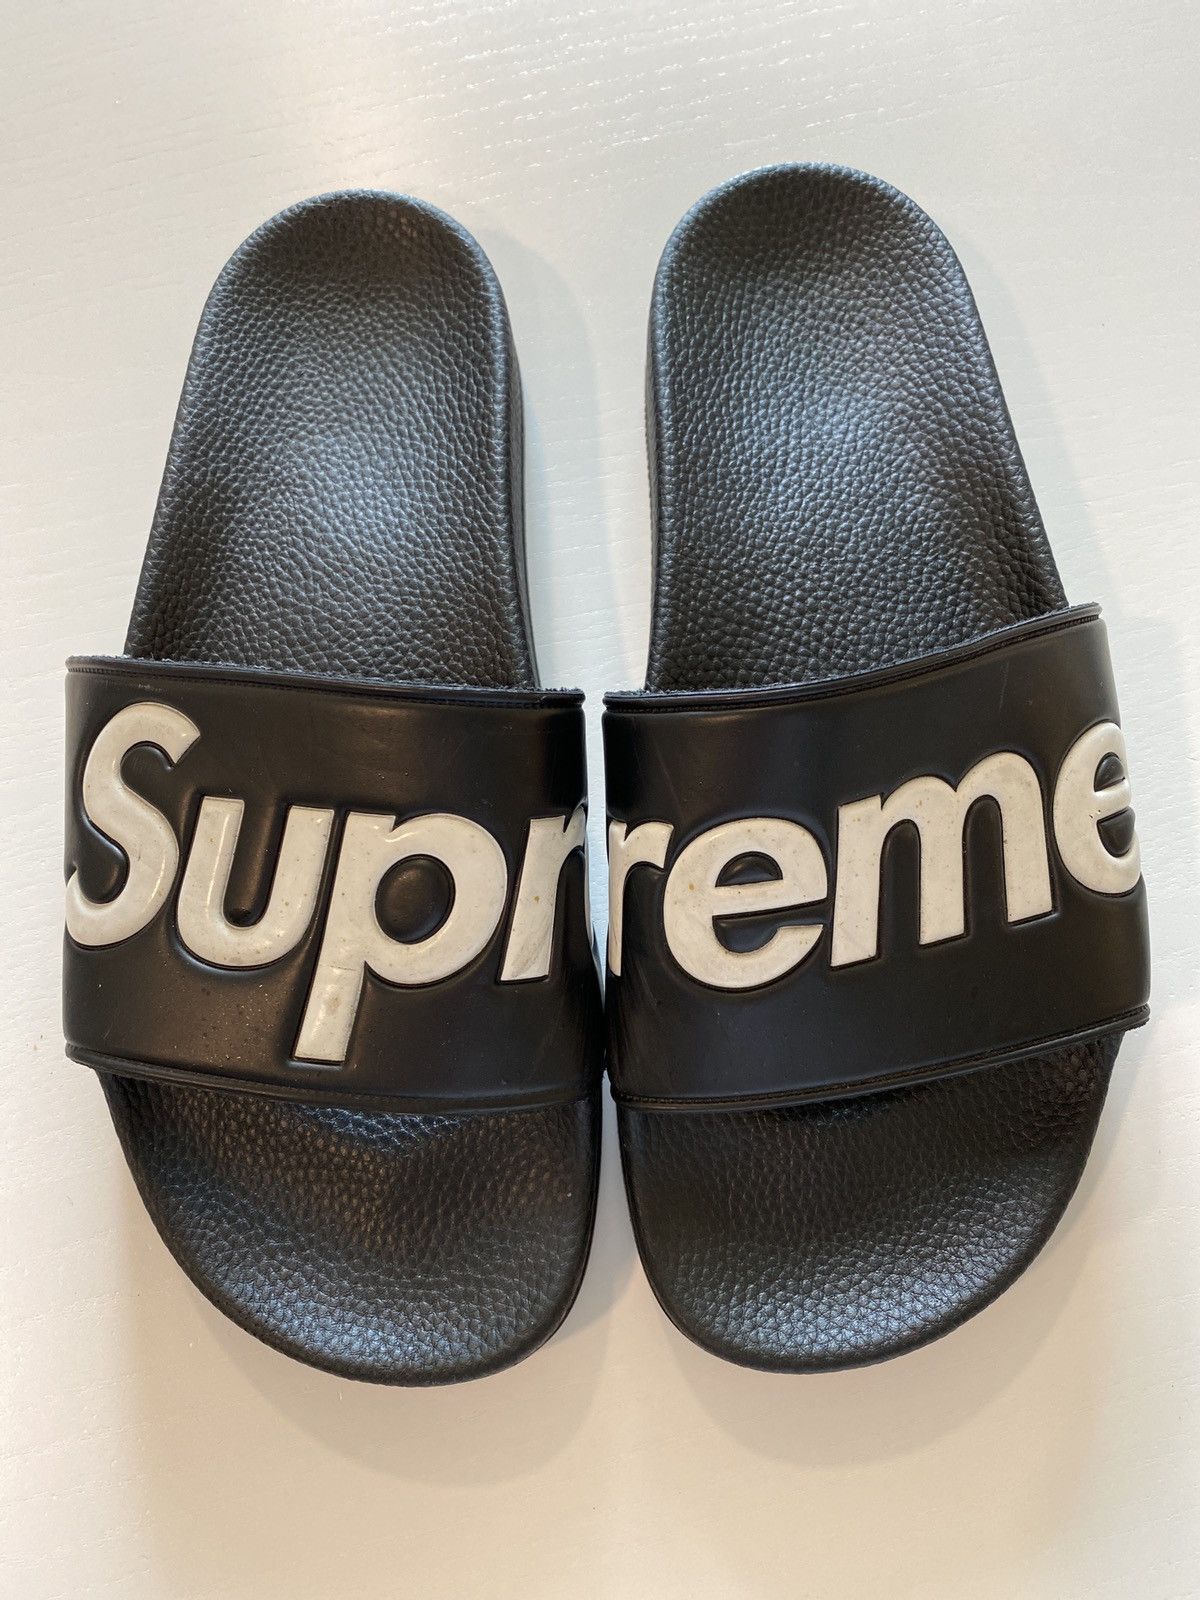 Supreme Slides Sandals Slippers Flip Flop Black Size 9 Brand New SS14  Authentic